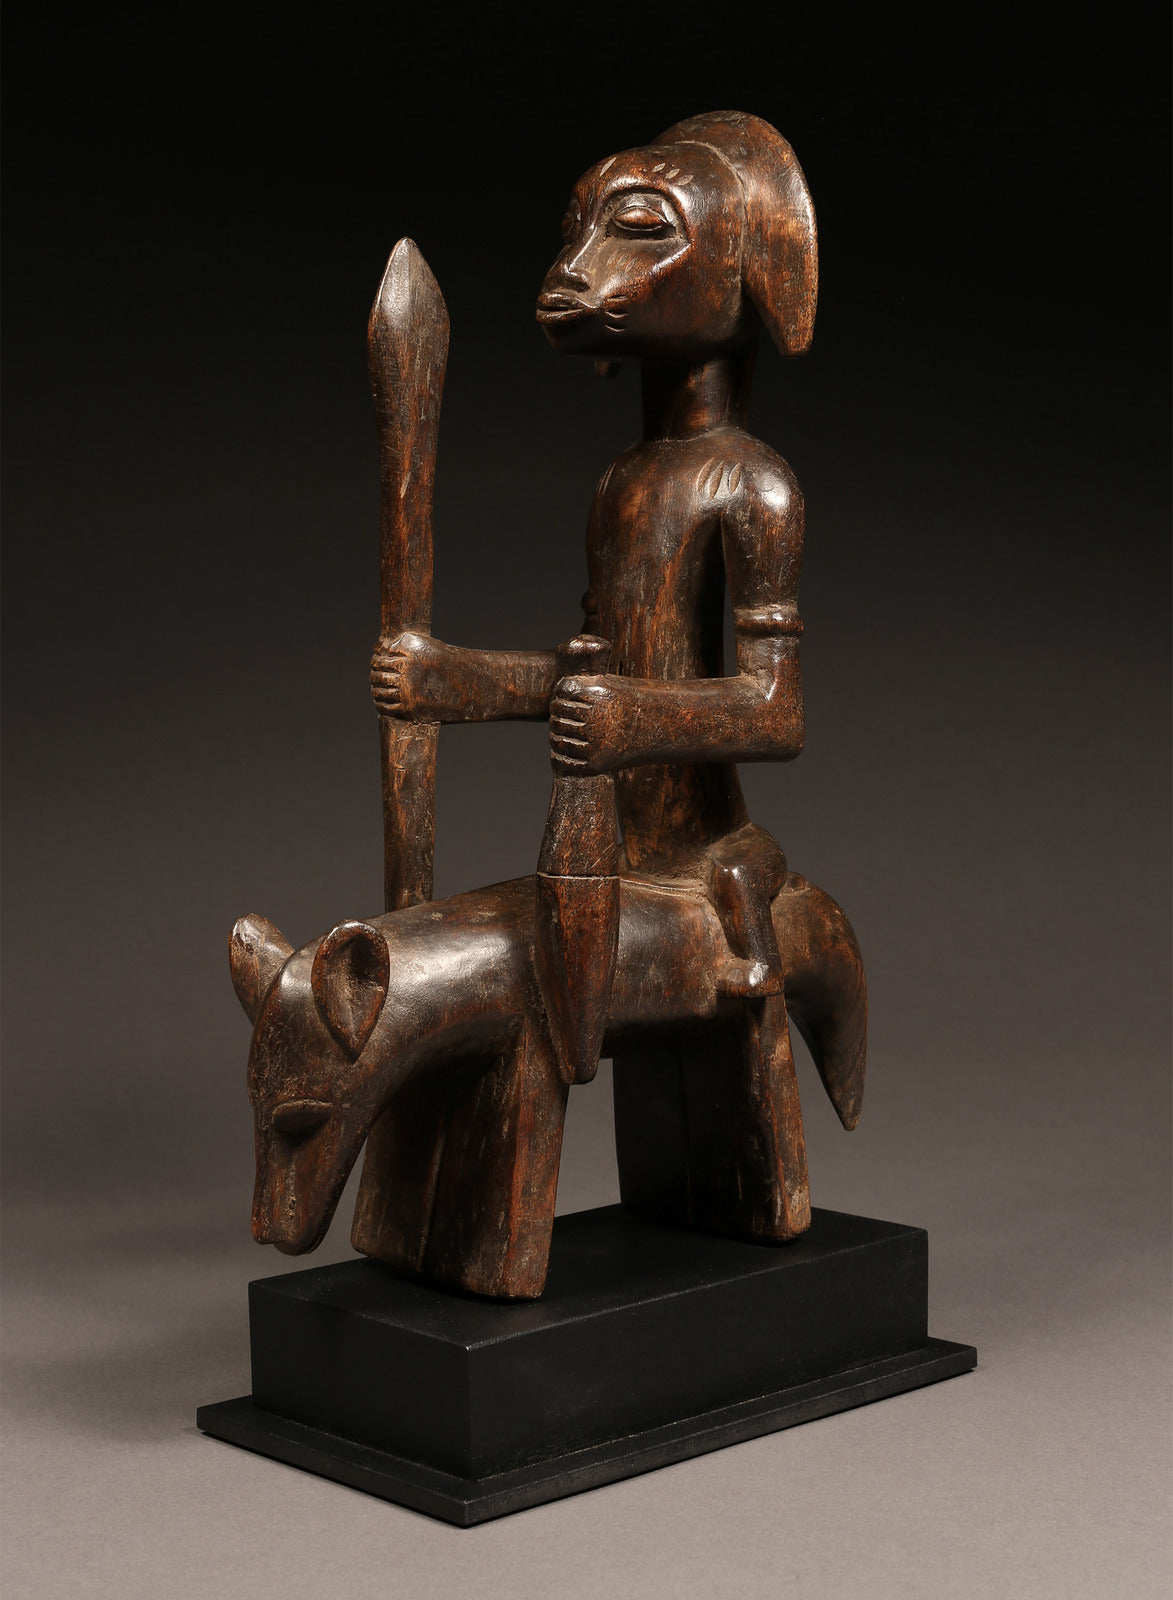 Senufo Sculptures  Wooden Sculptures  Tribal Sculptures Statues  Tribal Art - Sculptures  Traditional Art  Equestrian Figure  Collectibles Sculptures Statues  African Sculptures Statues  African Artwork  African Art